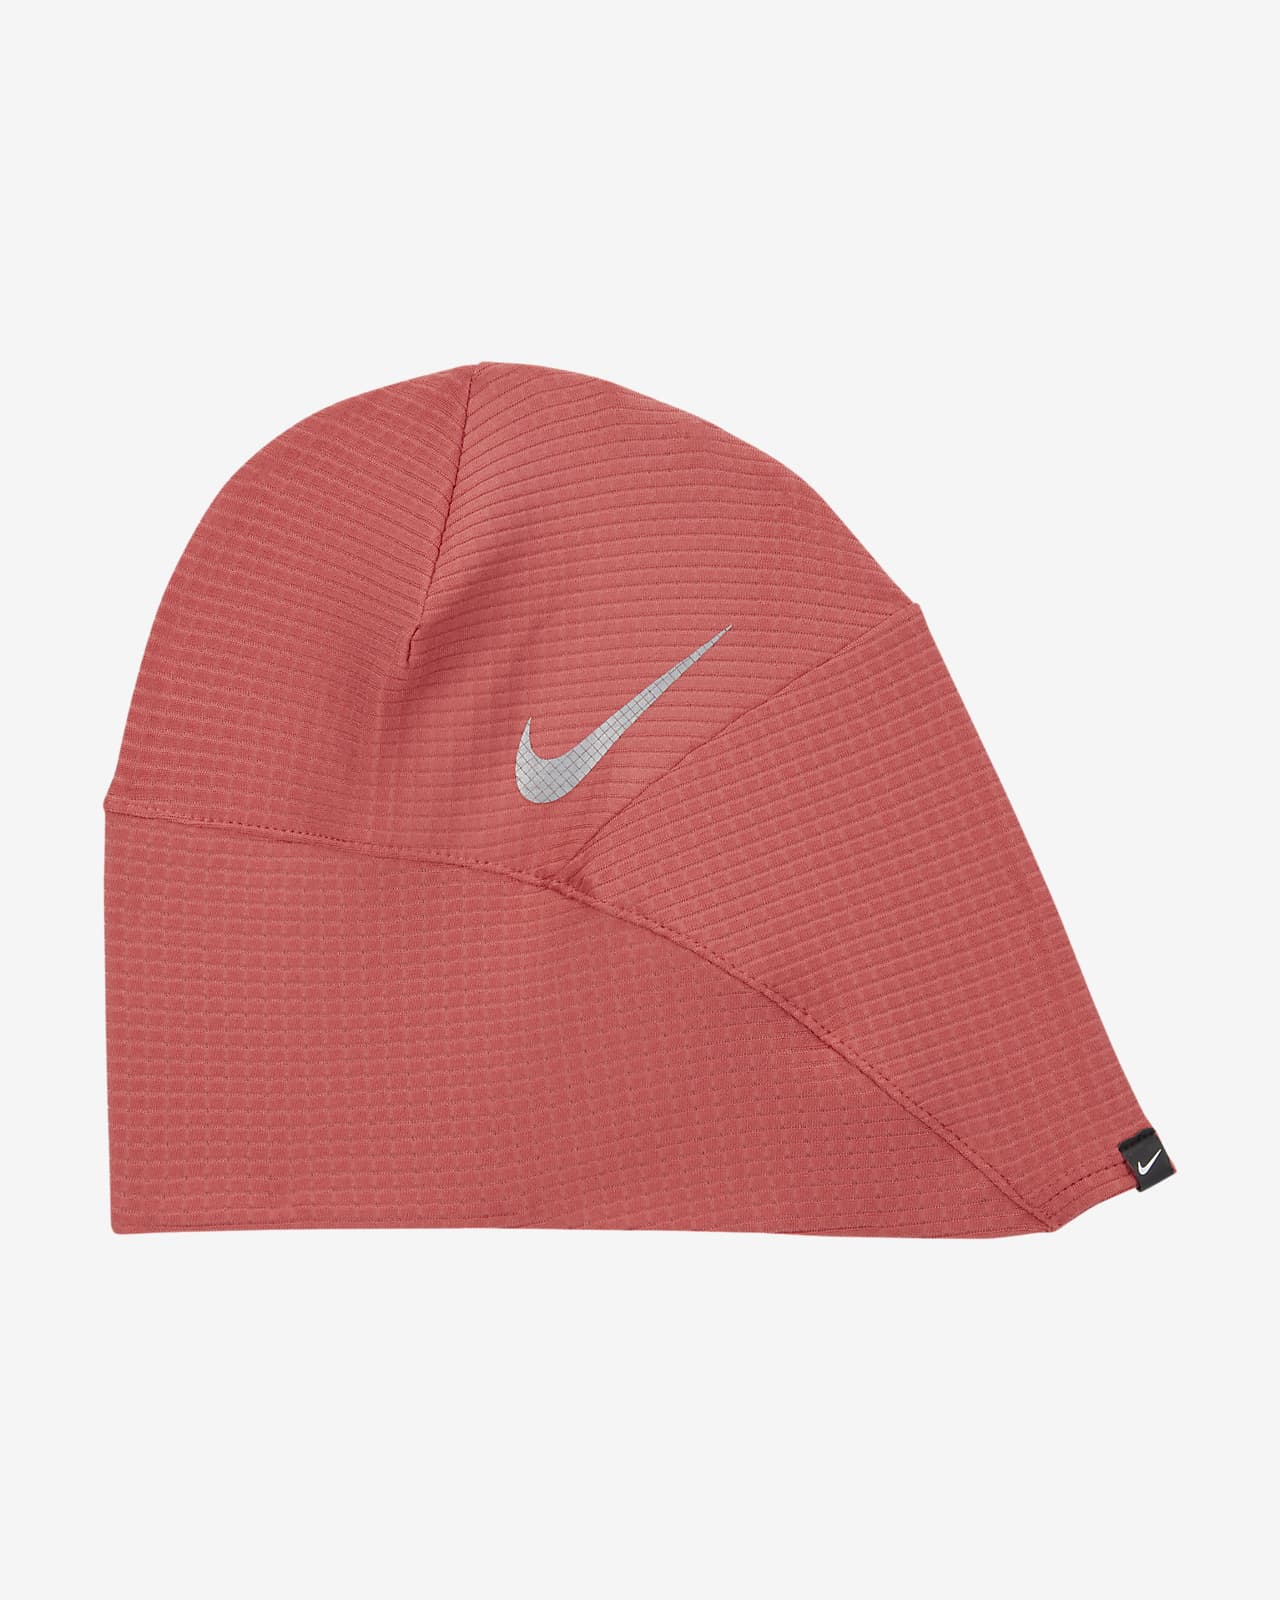 Men's Hats & Caps. Nike HU